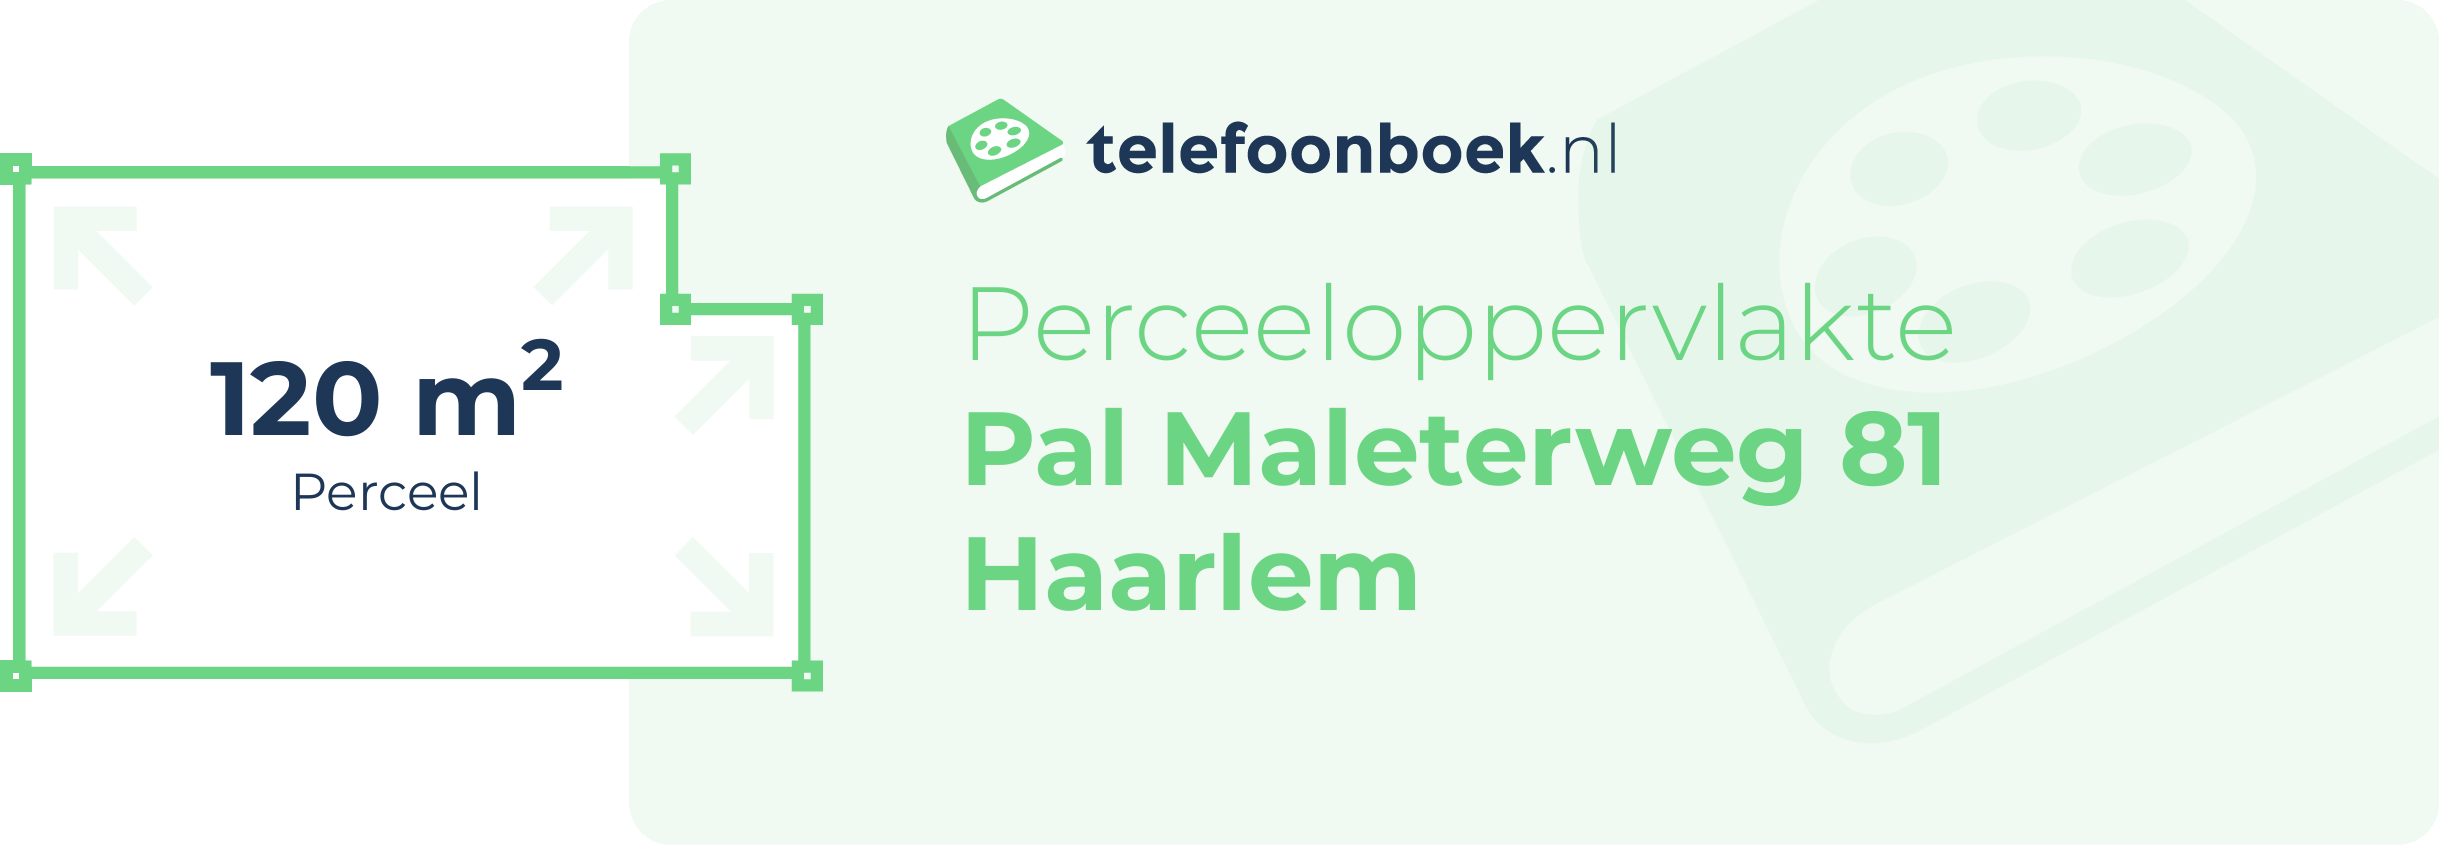 Perceeloppervlakte Pal Maleterweg 81 Haarlem